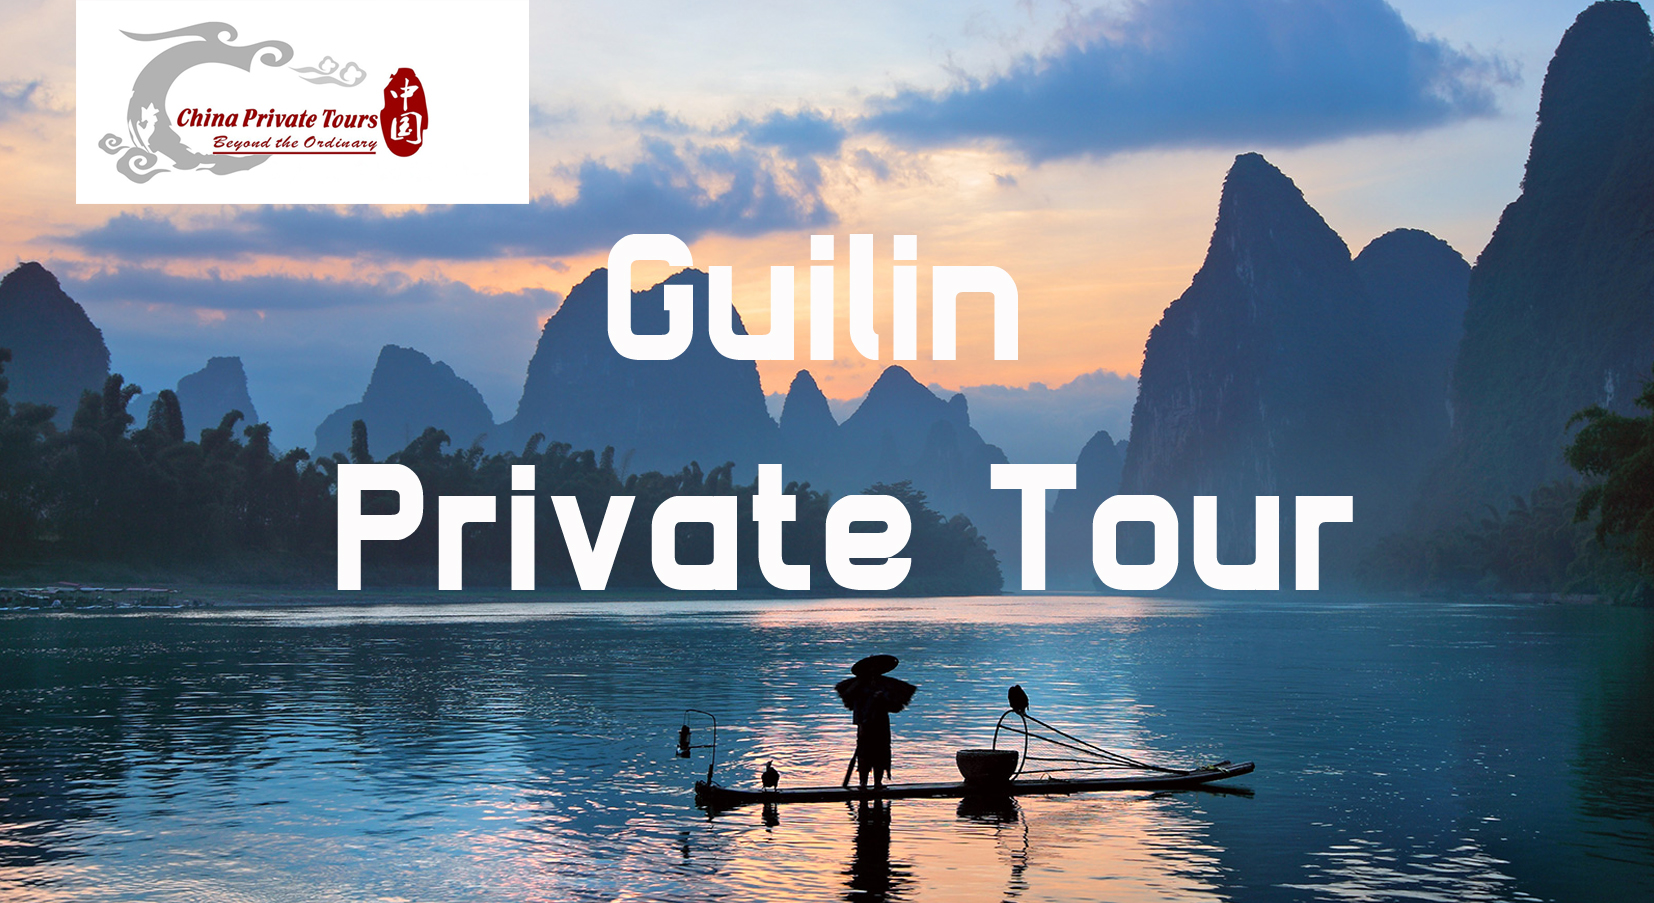 Guilin_Private_Tour.jpg